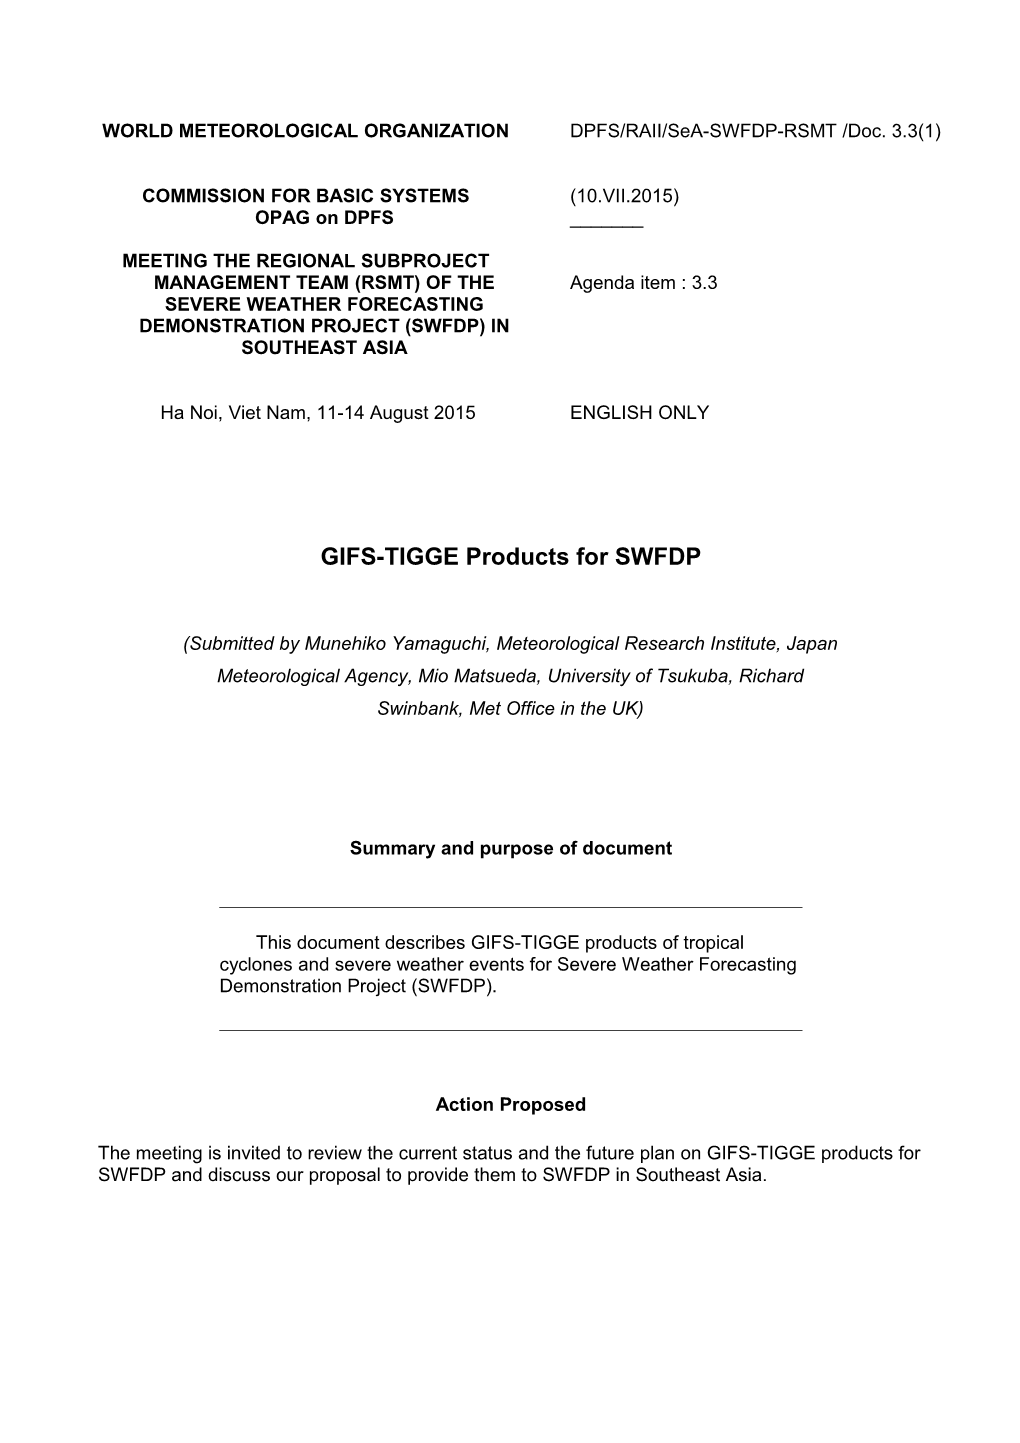 DPFS/RAII/Sea-SWFDP-RSMT/Doc. 3.3(1), P. 1